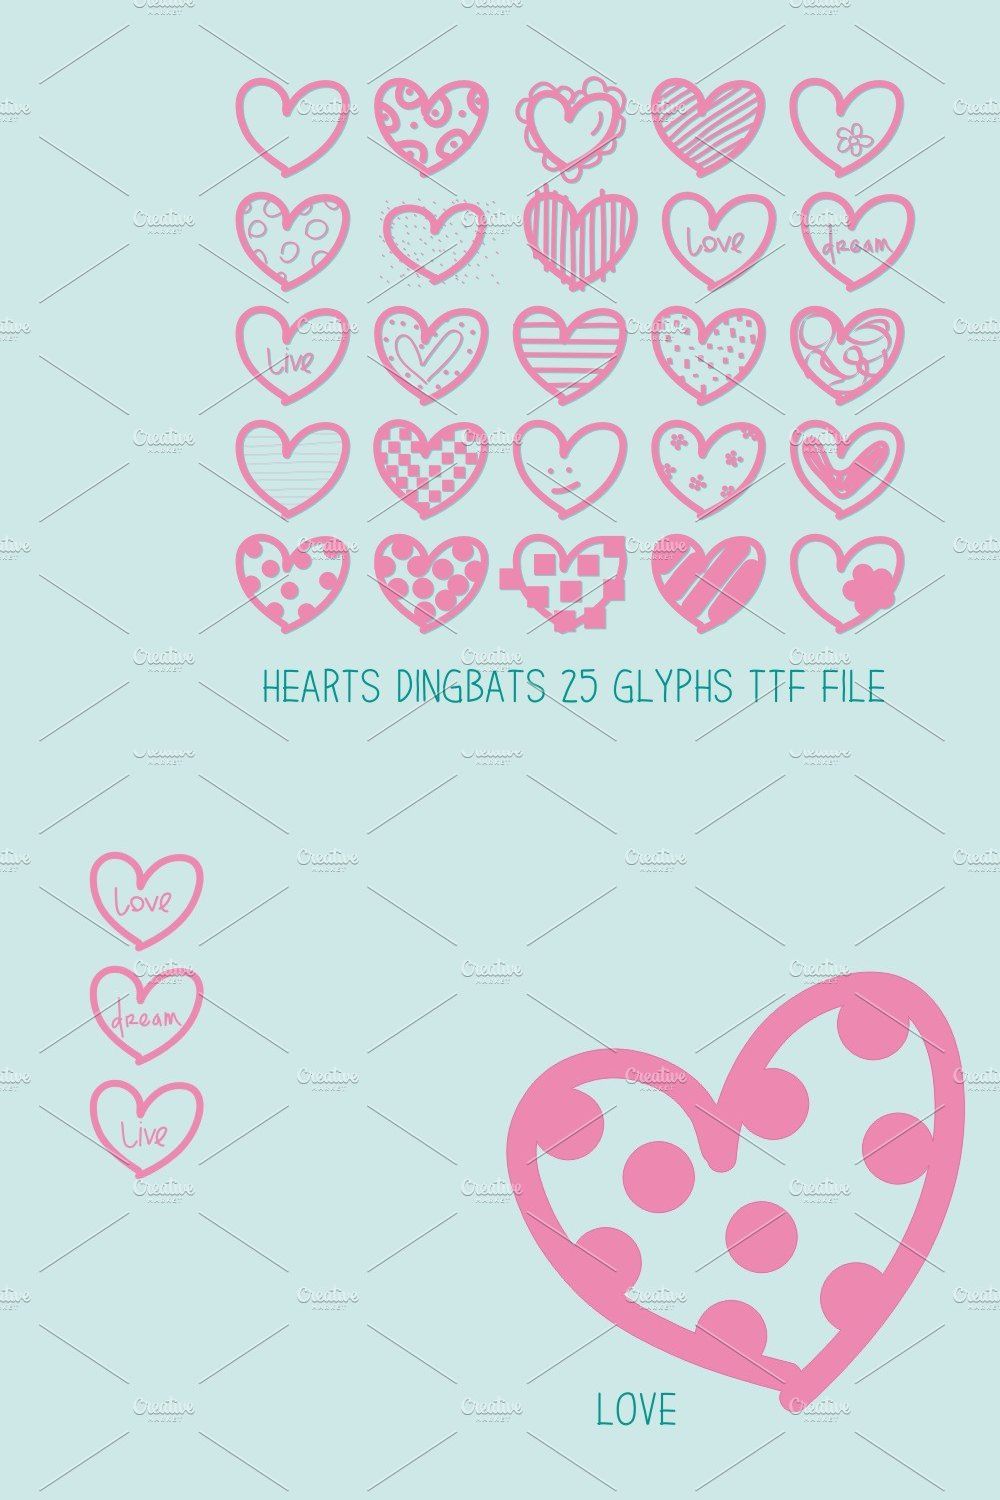 Hearts Dingbats pinterest preview image.